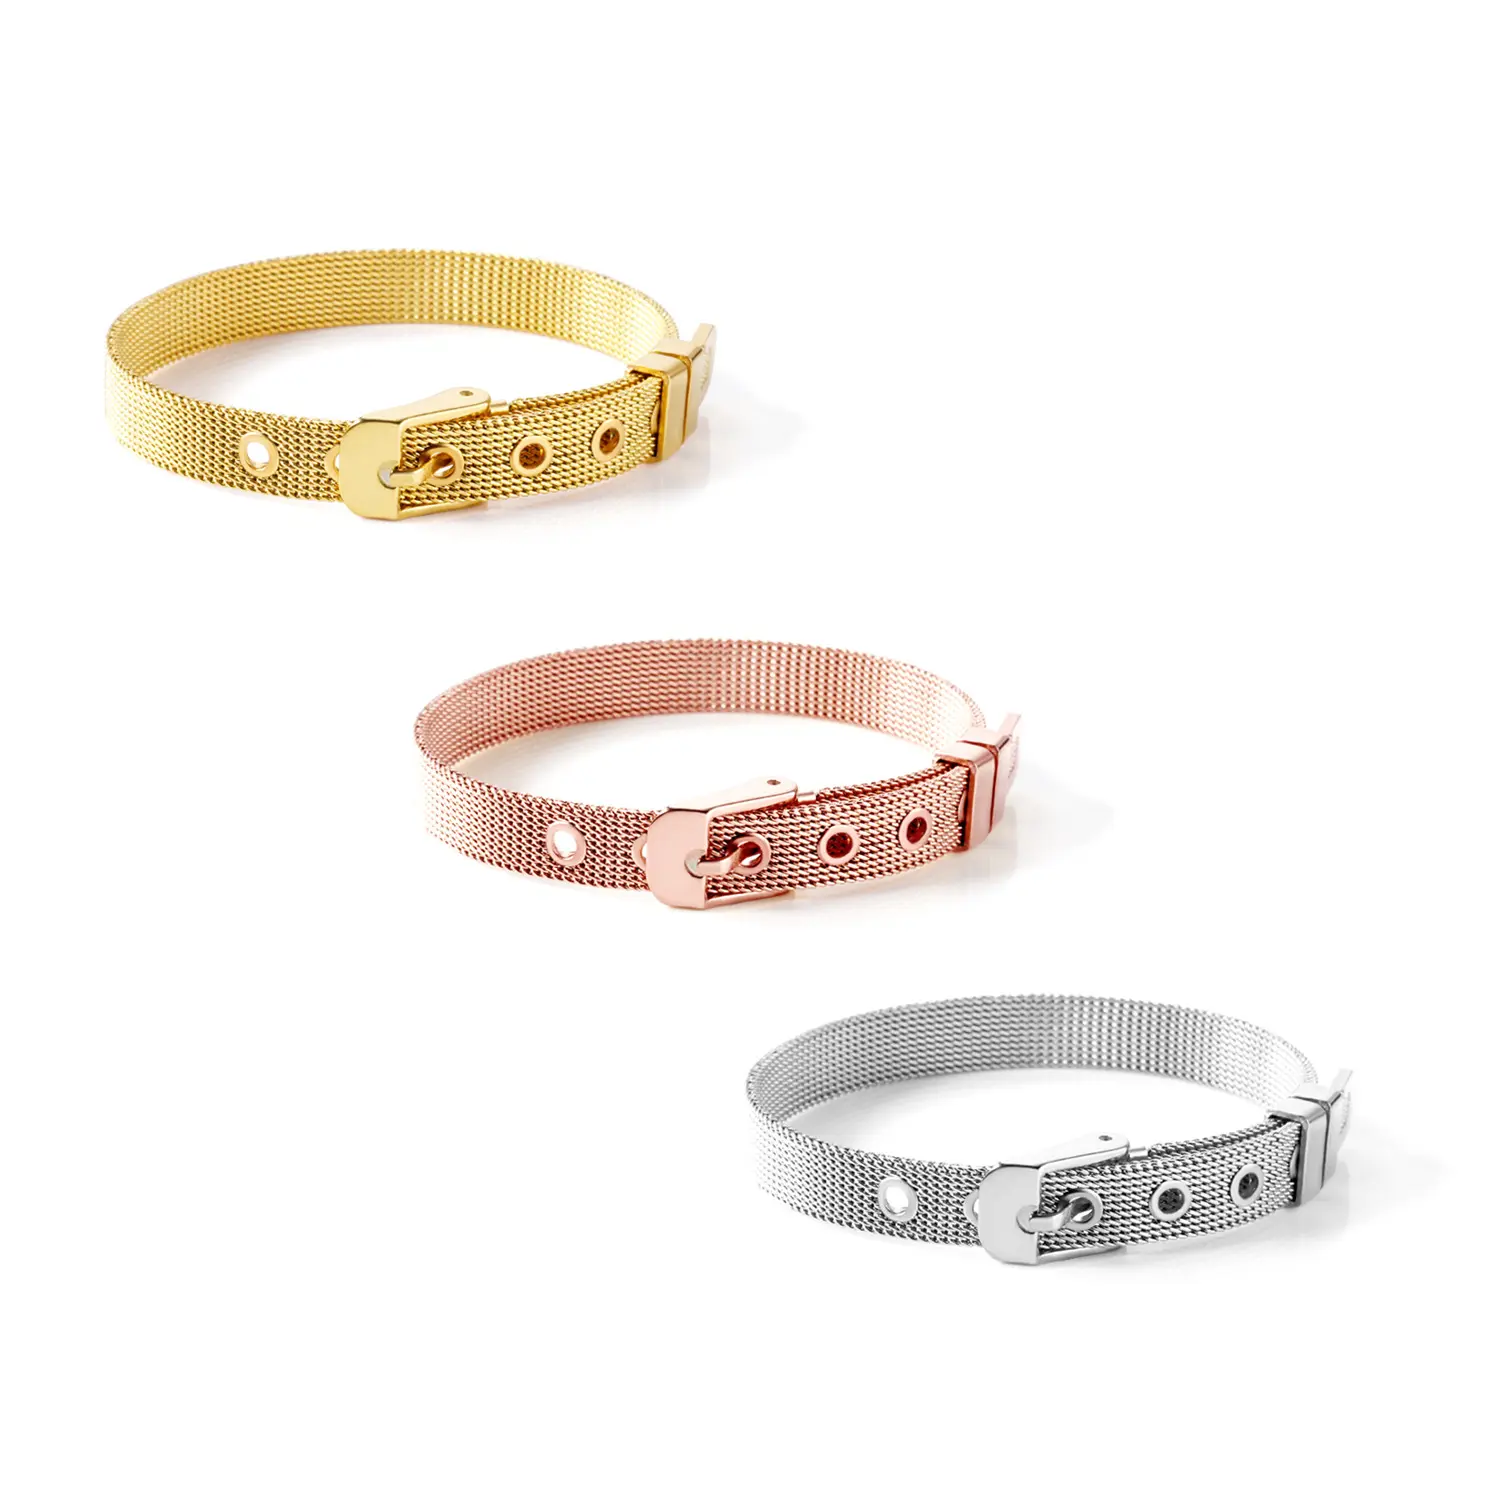 MEIZI JEWELRY Hot Sale Bracelet Electroplated Stainless Steel Watch Band Bracelet Design Ladies Bracelet Adjustable